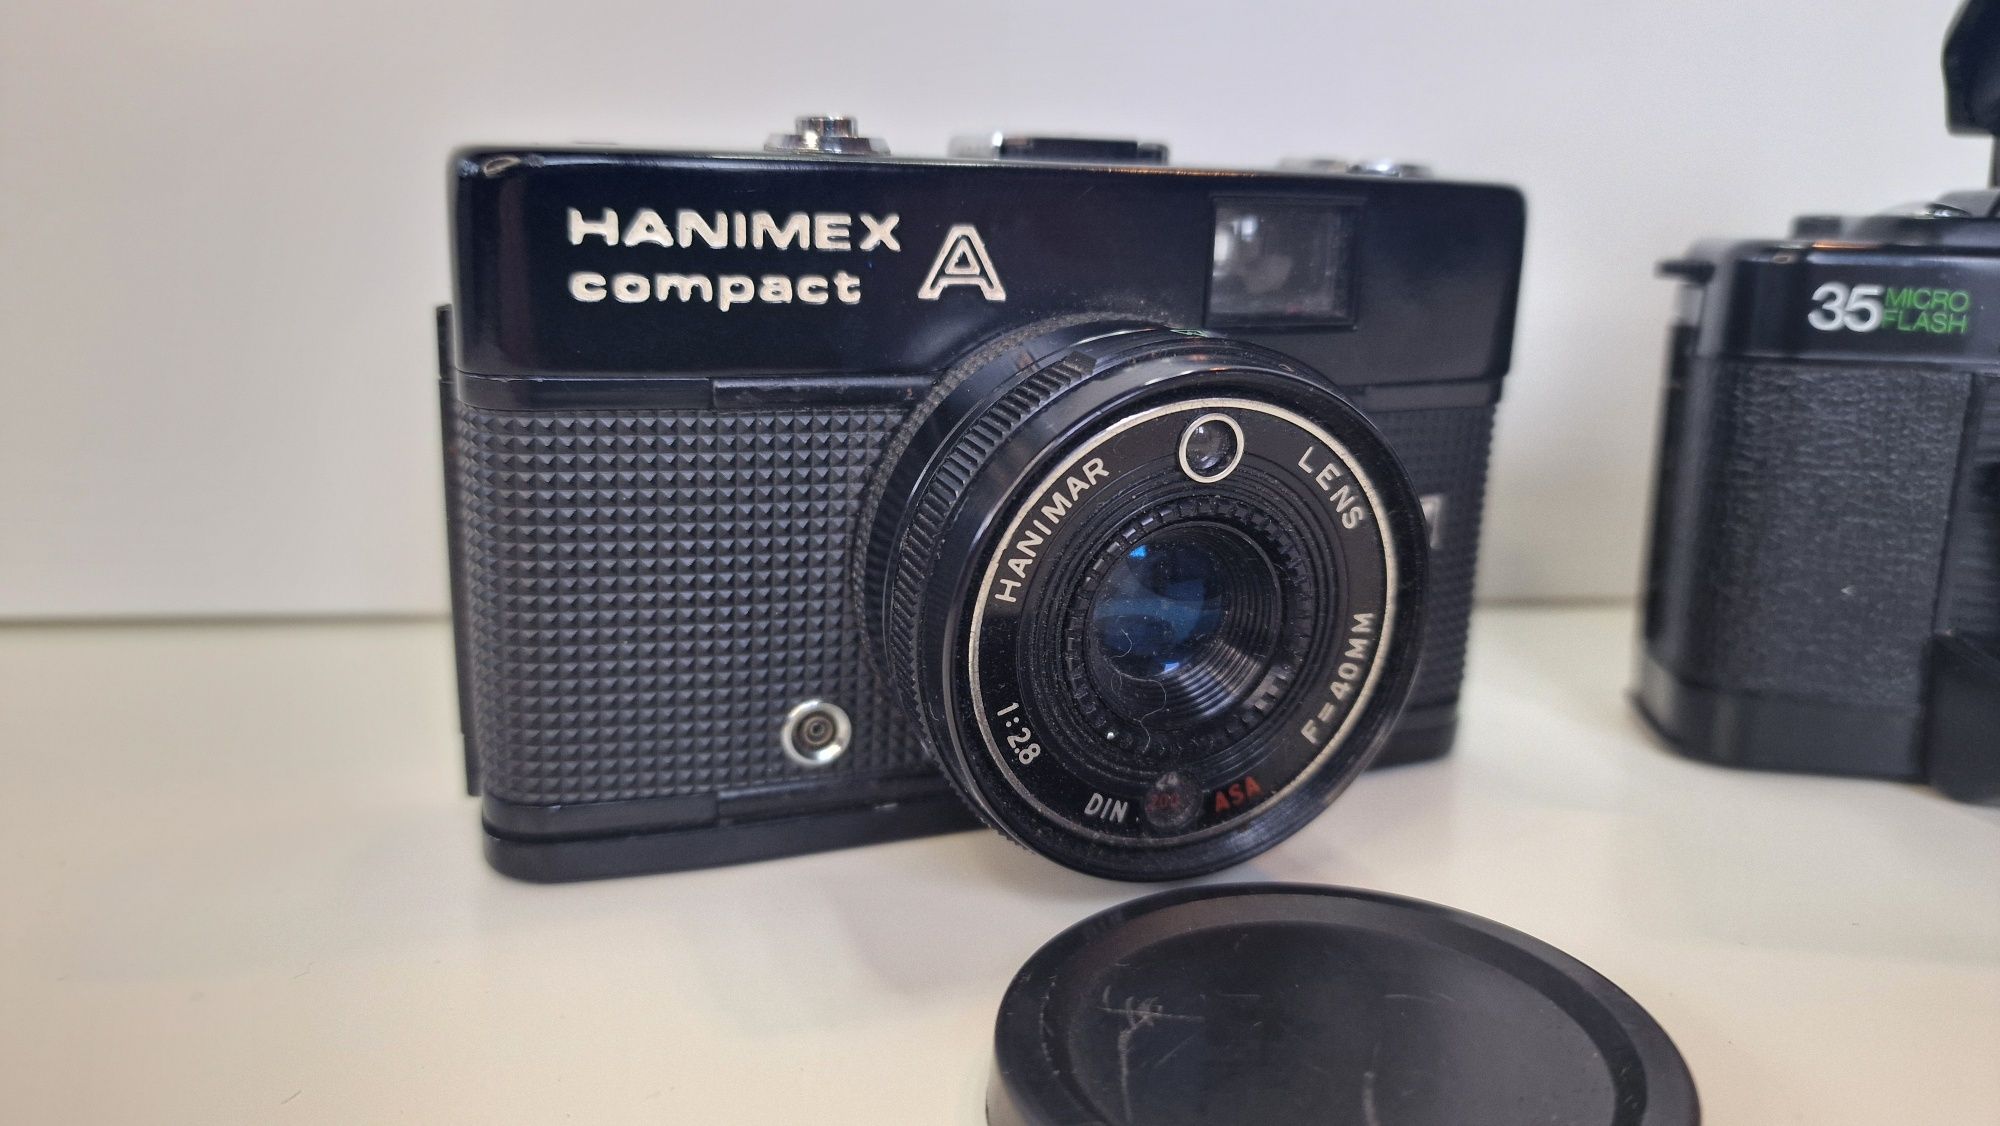 Hanimex compact A i 35 Micro Flash